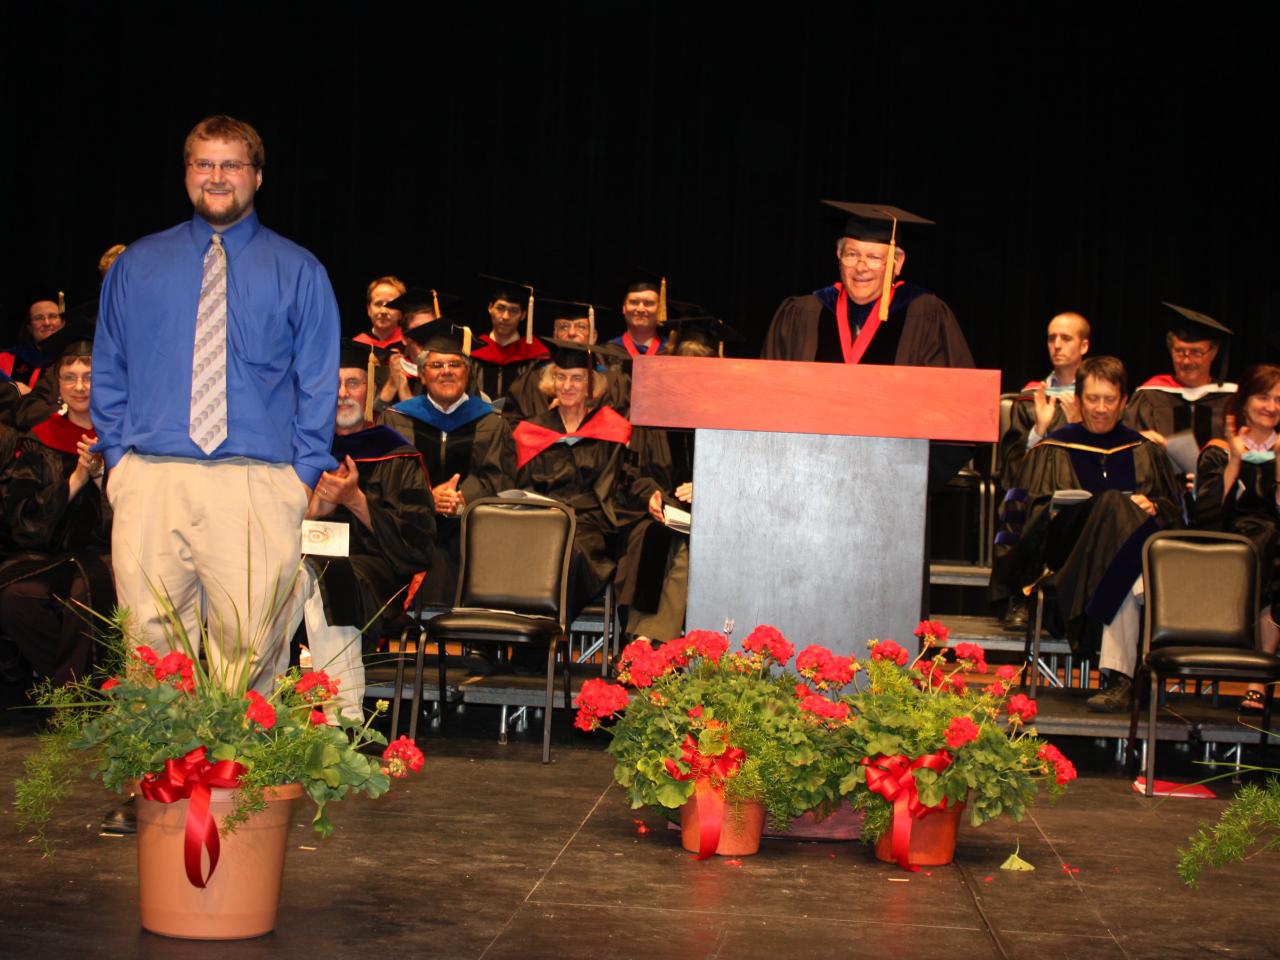 Bill Ackerman presents an award to an honors student at an academic celebration